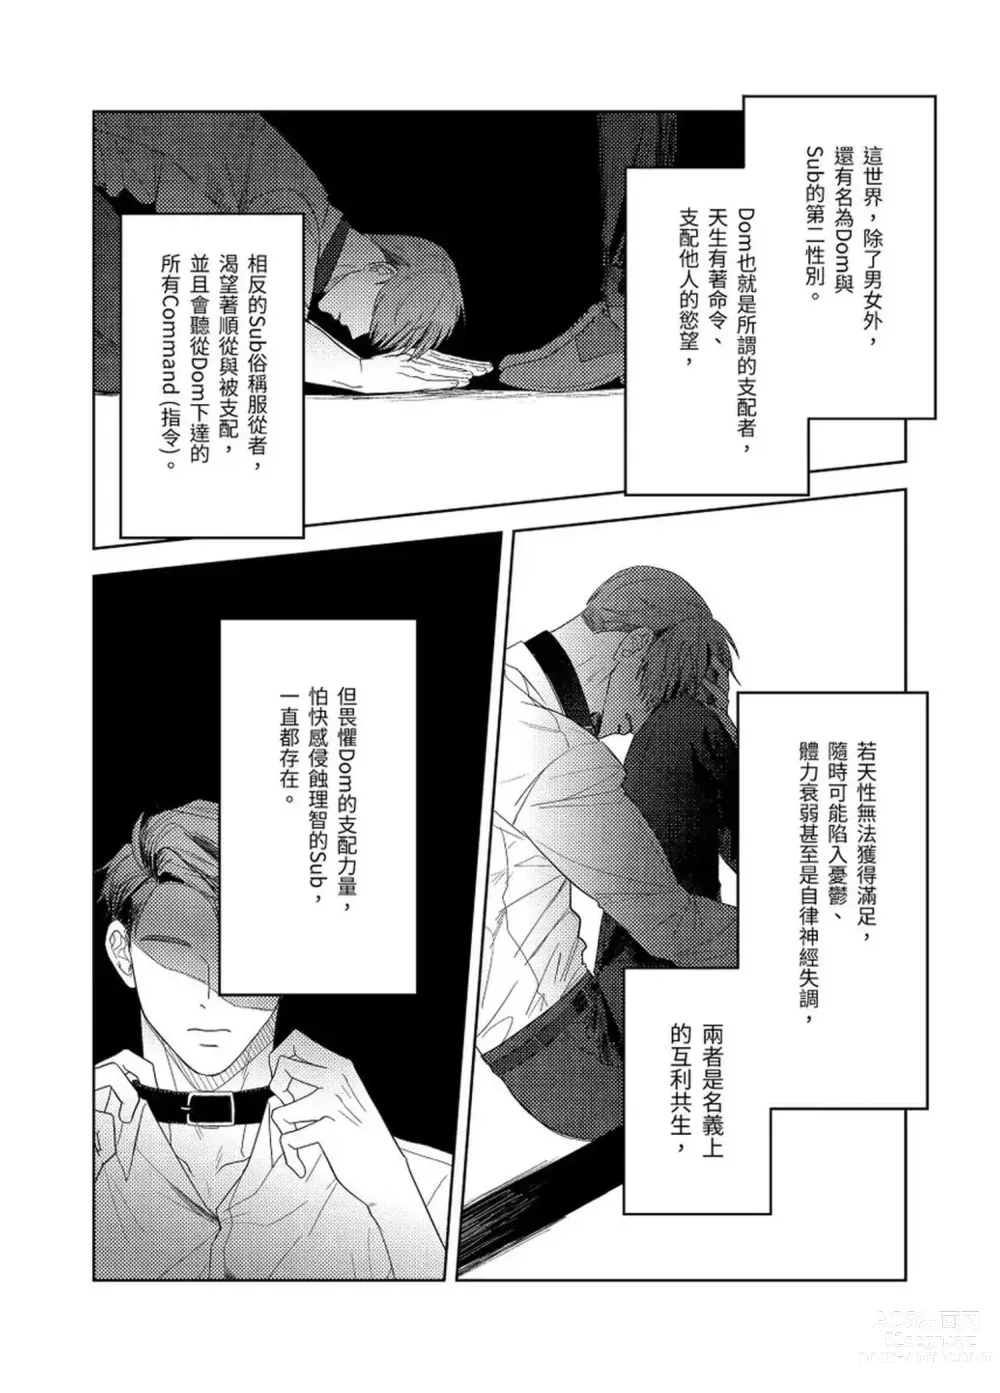 Page 3 of manga Dom&Sub